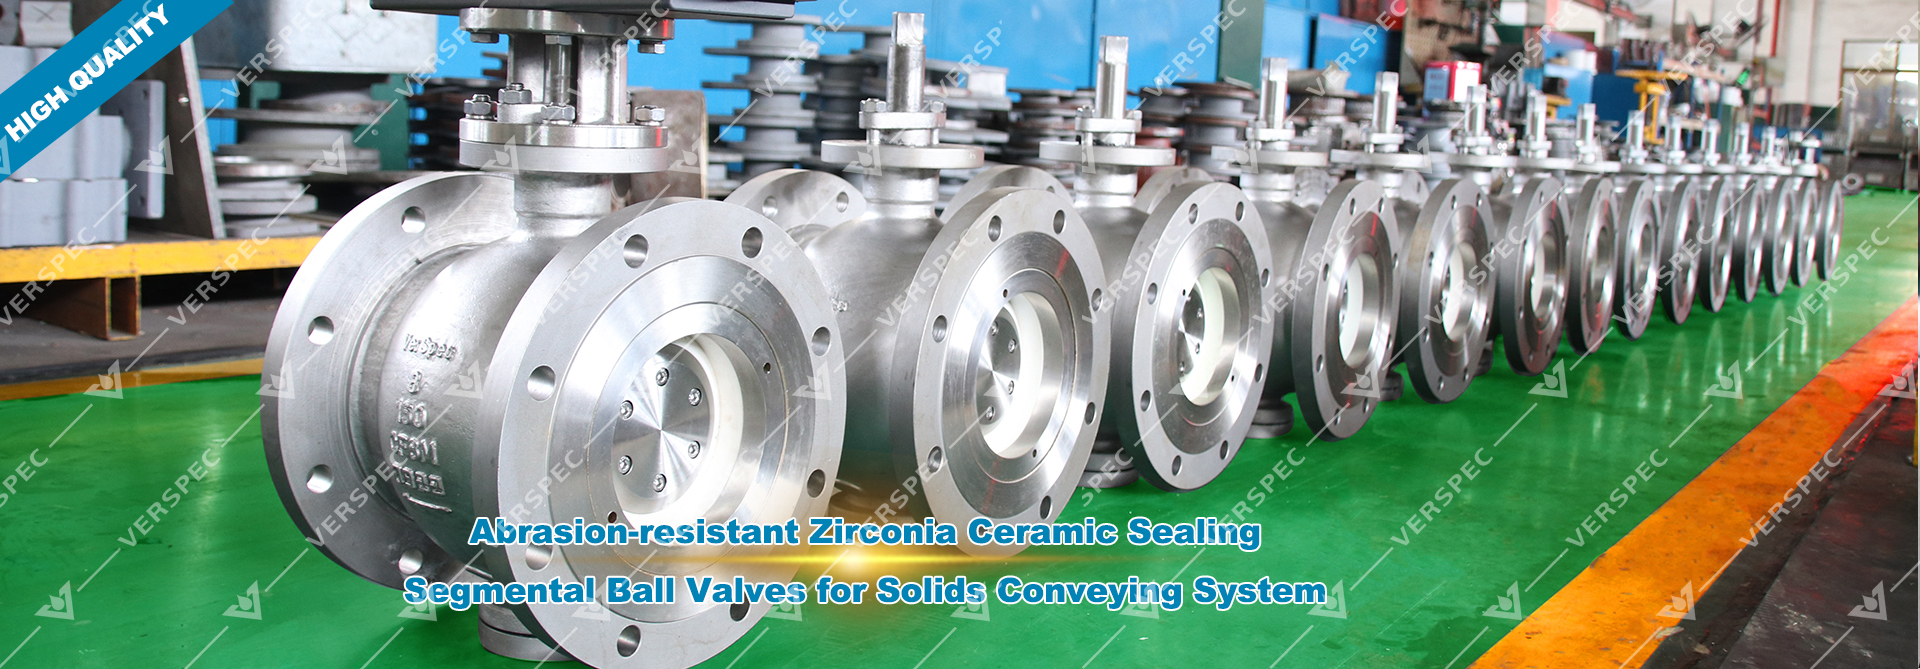 Abrasion-resistant Zirconia Ceramic Sealing